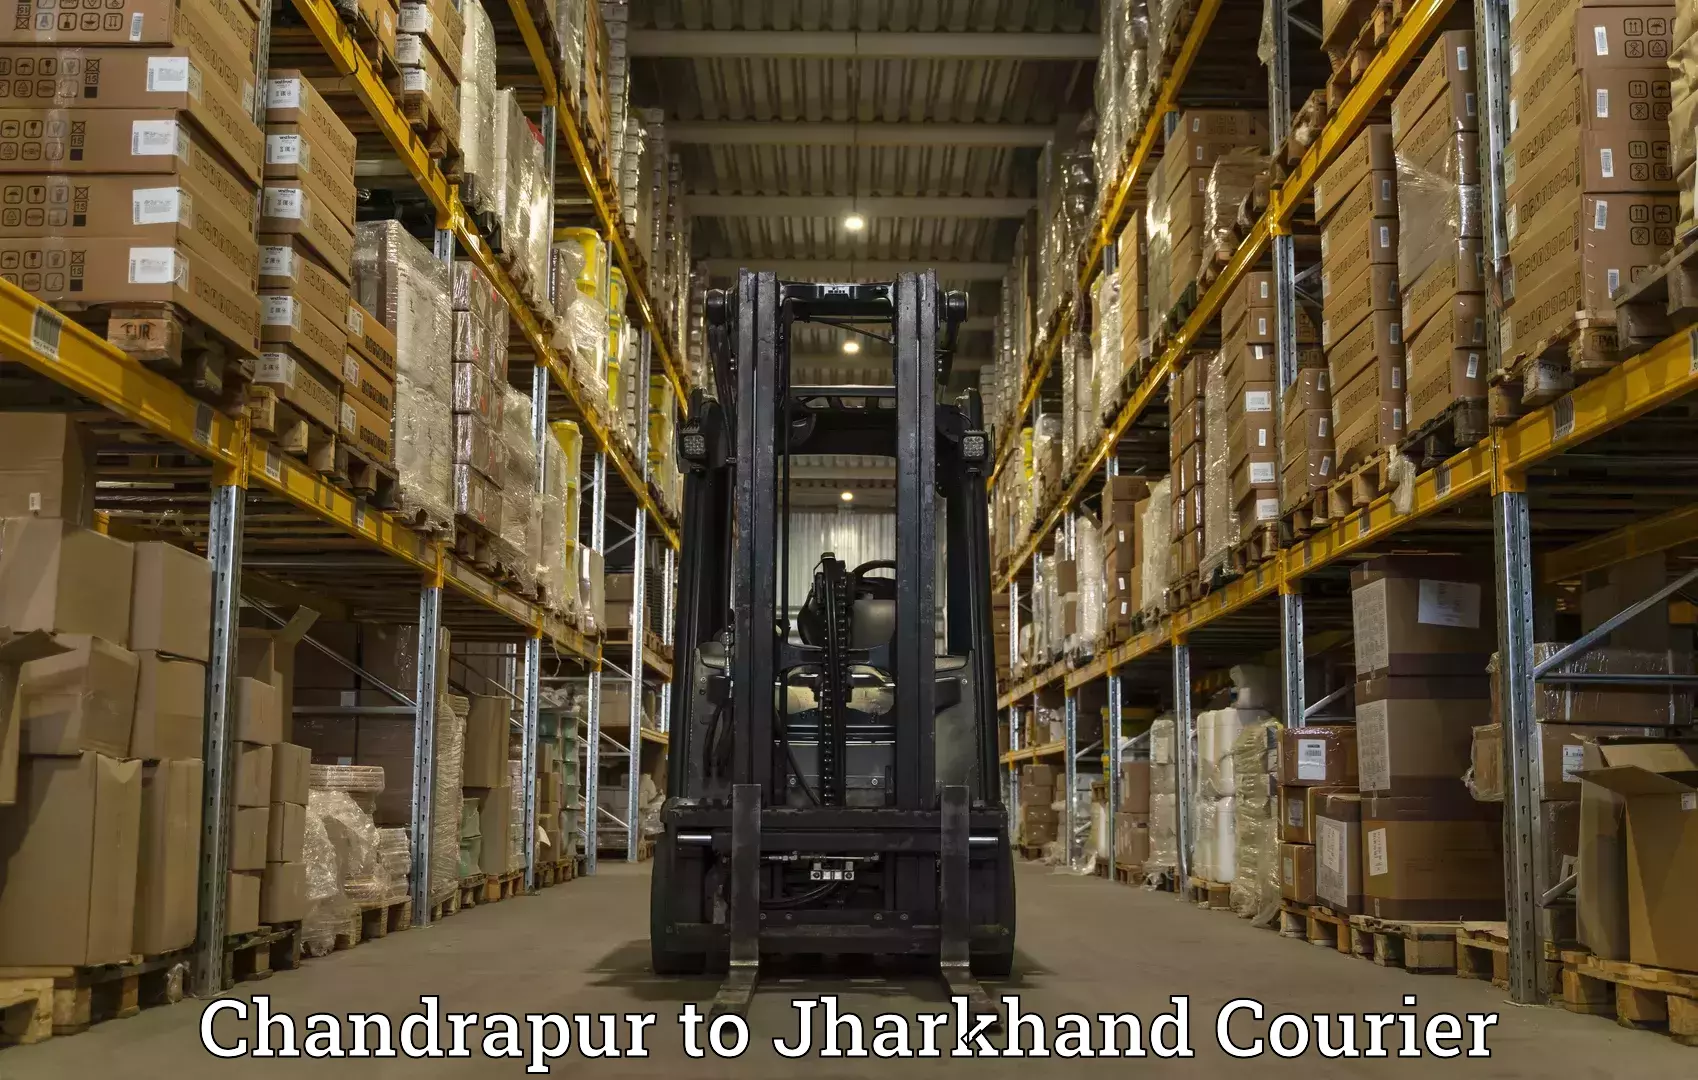 Global logistics network Chandrapur to Hazaribagh